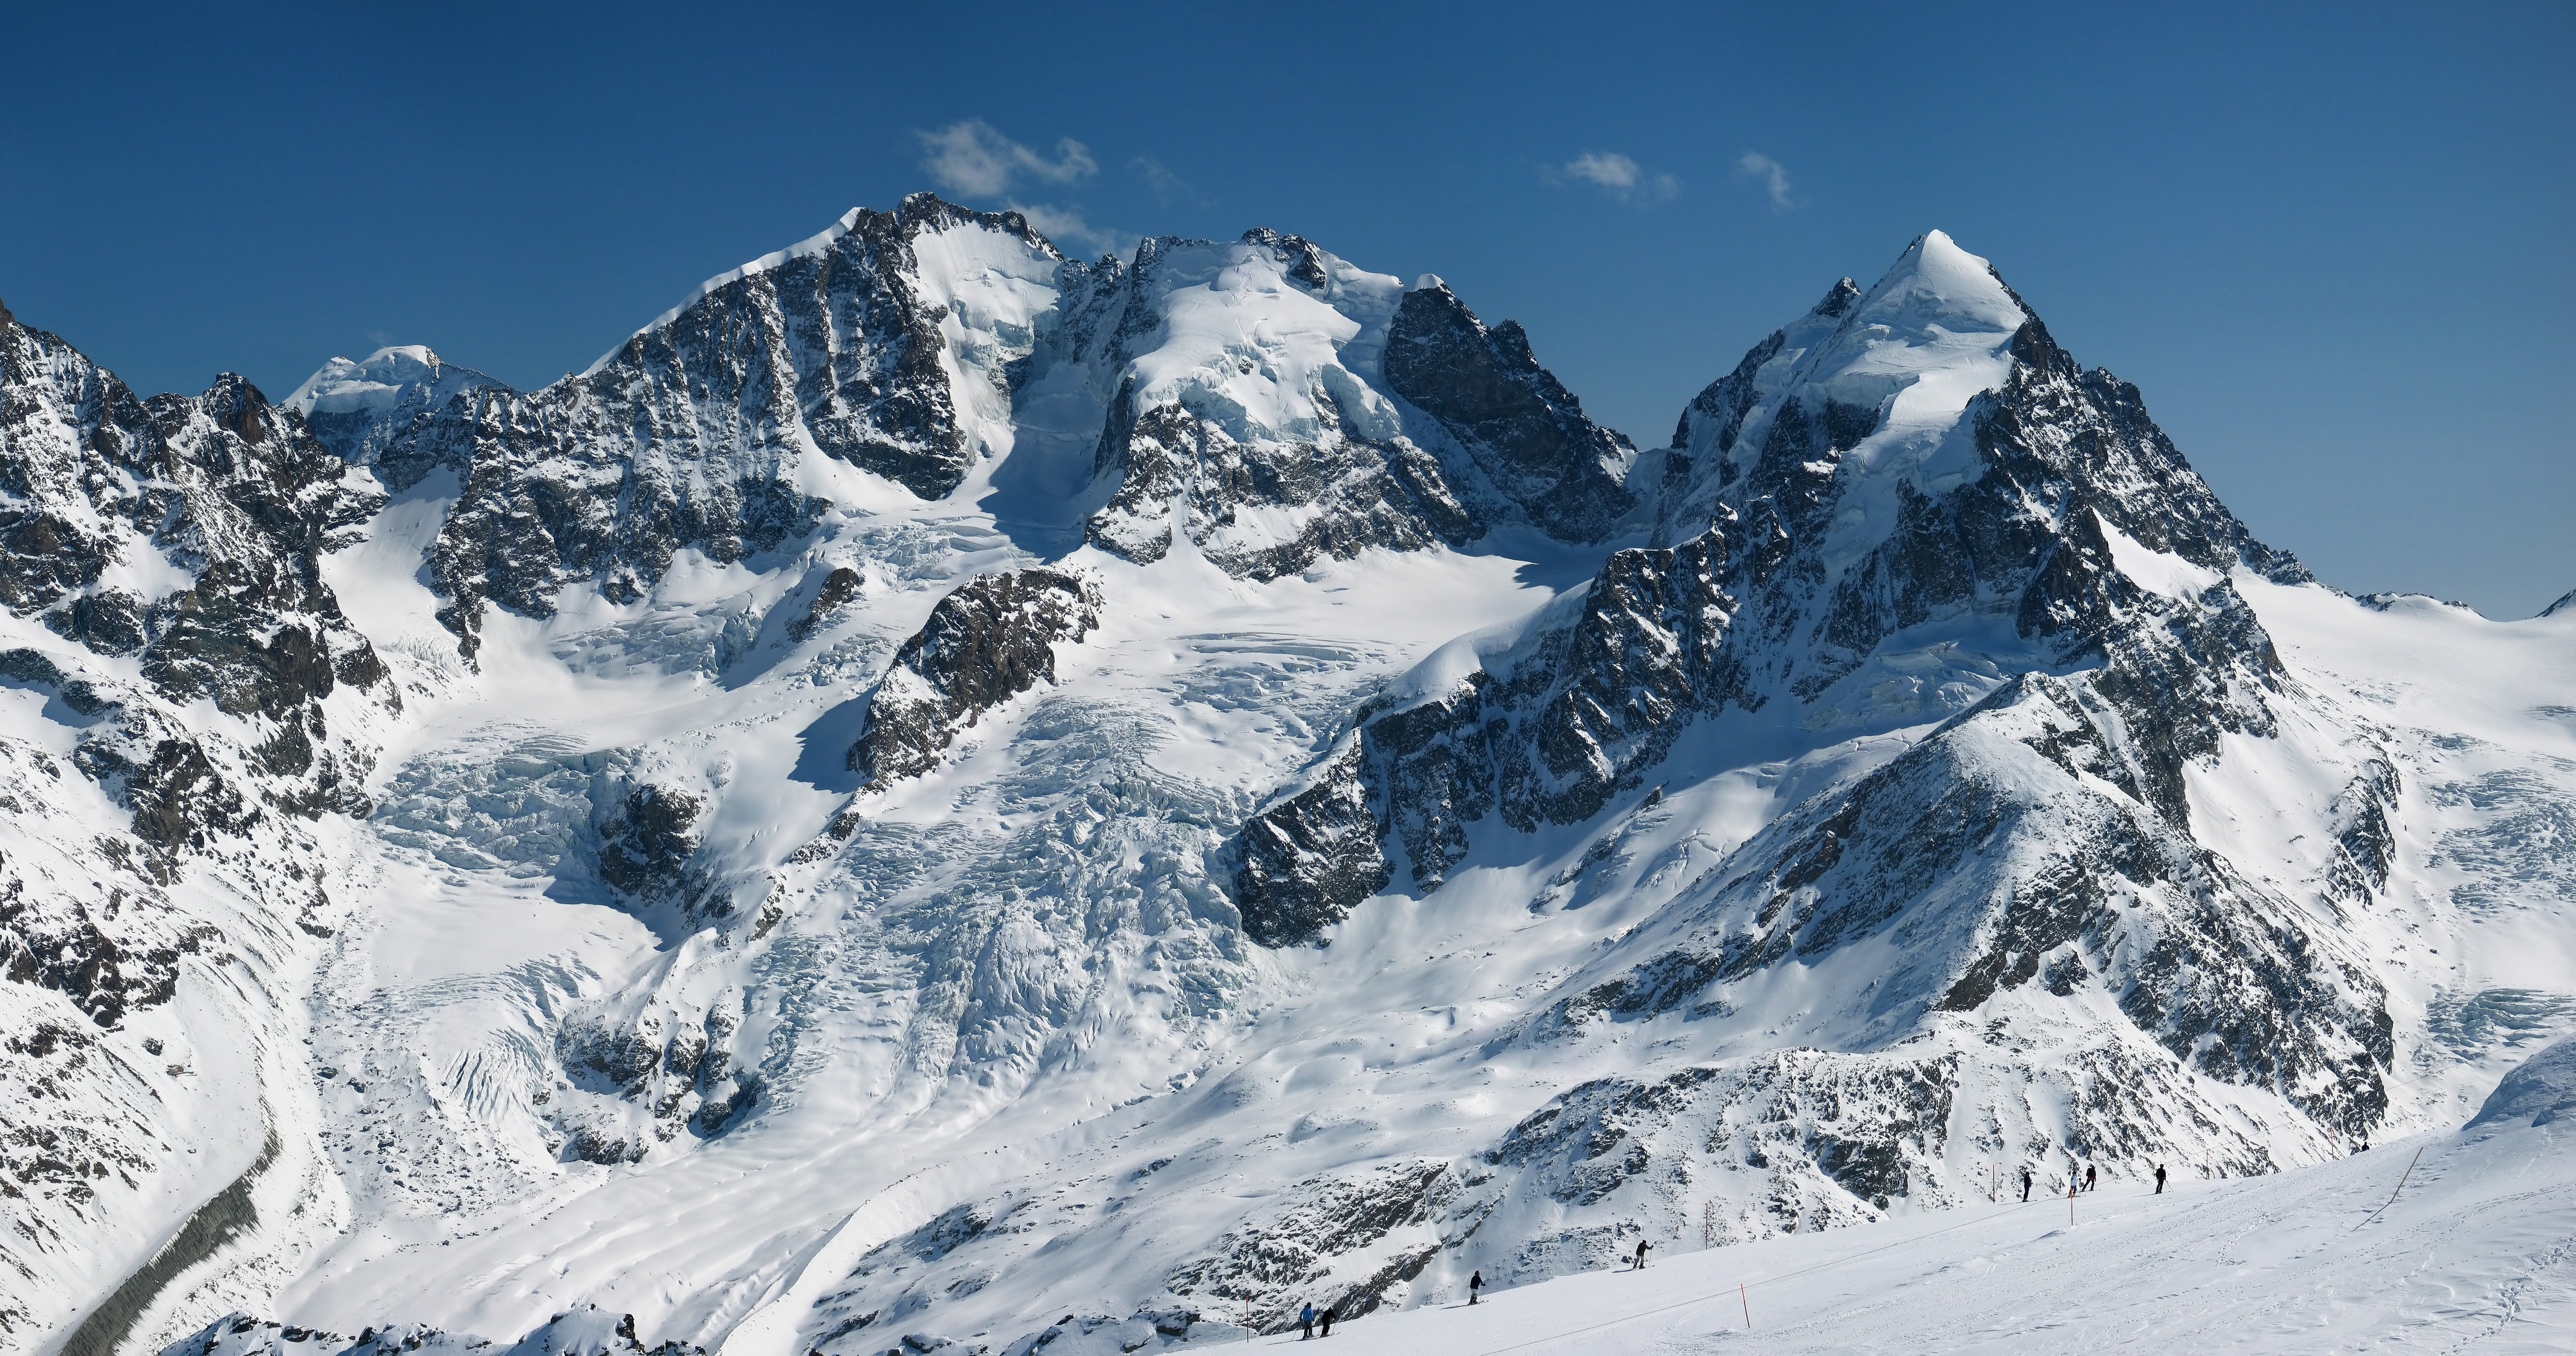 Alps - Mountain Range in Europe - Thousand Wonders